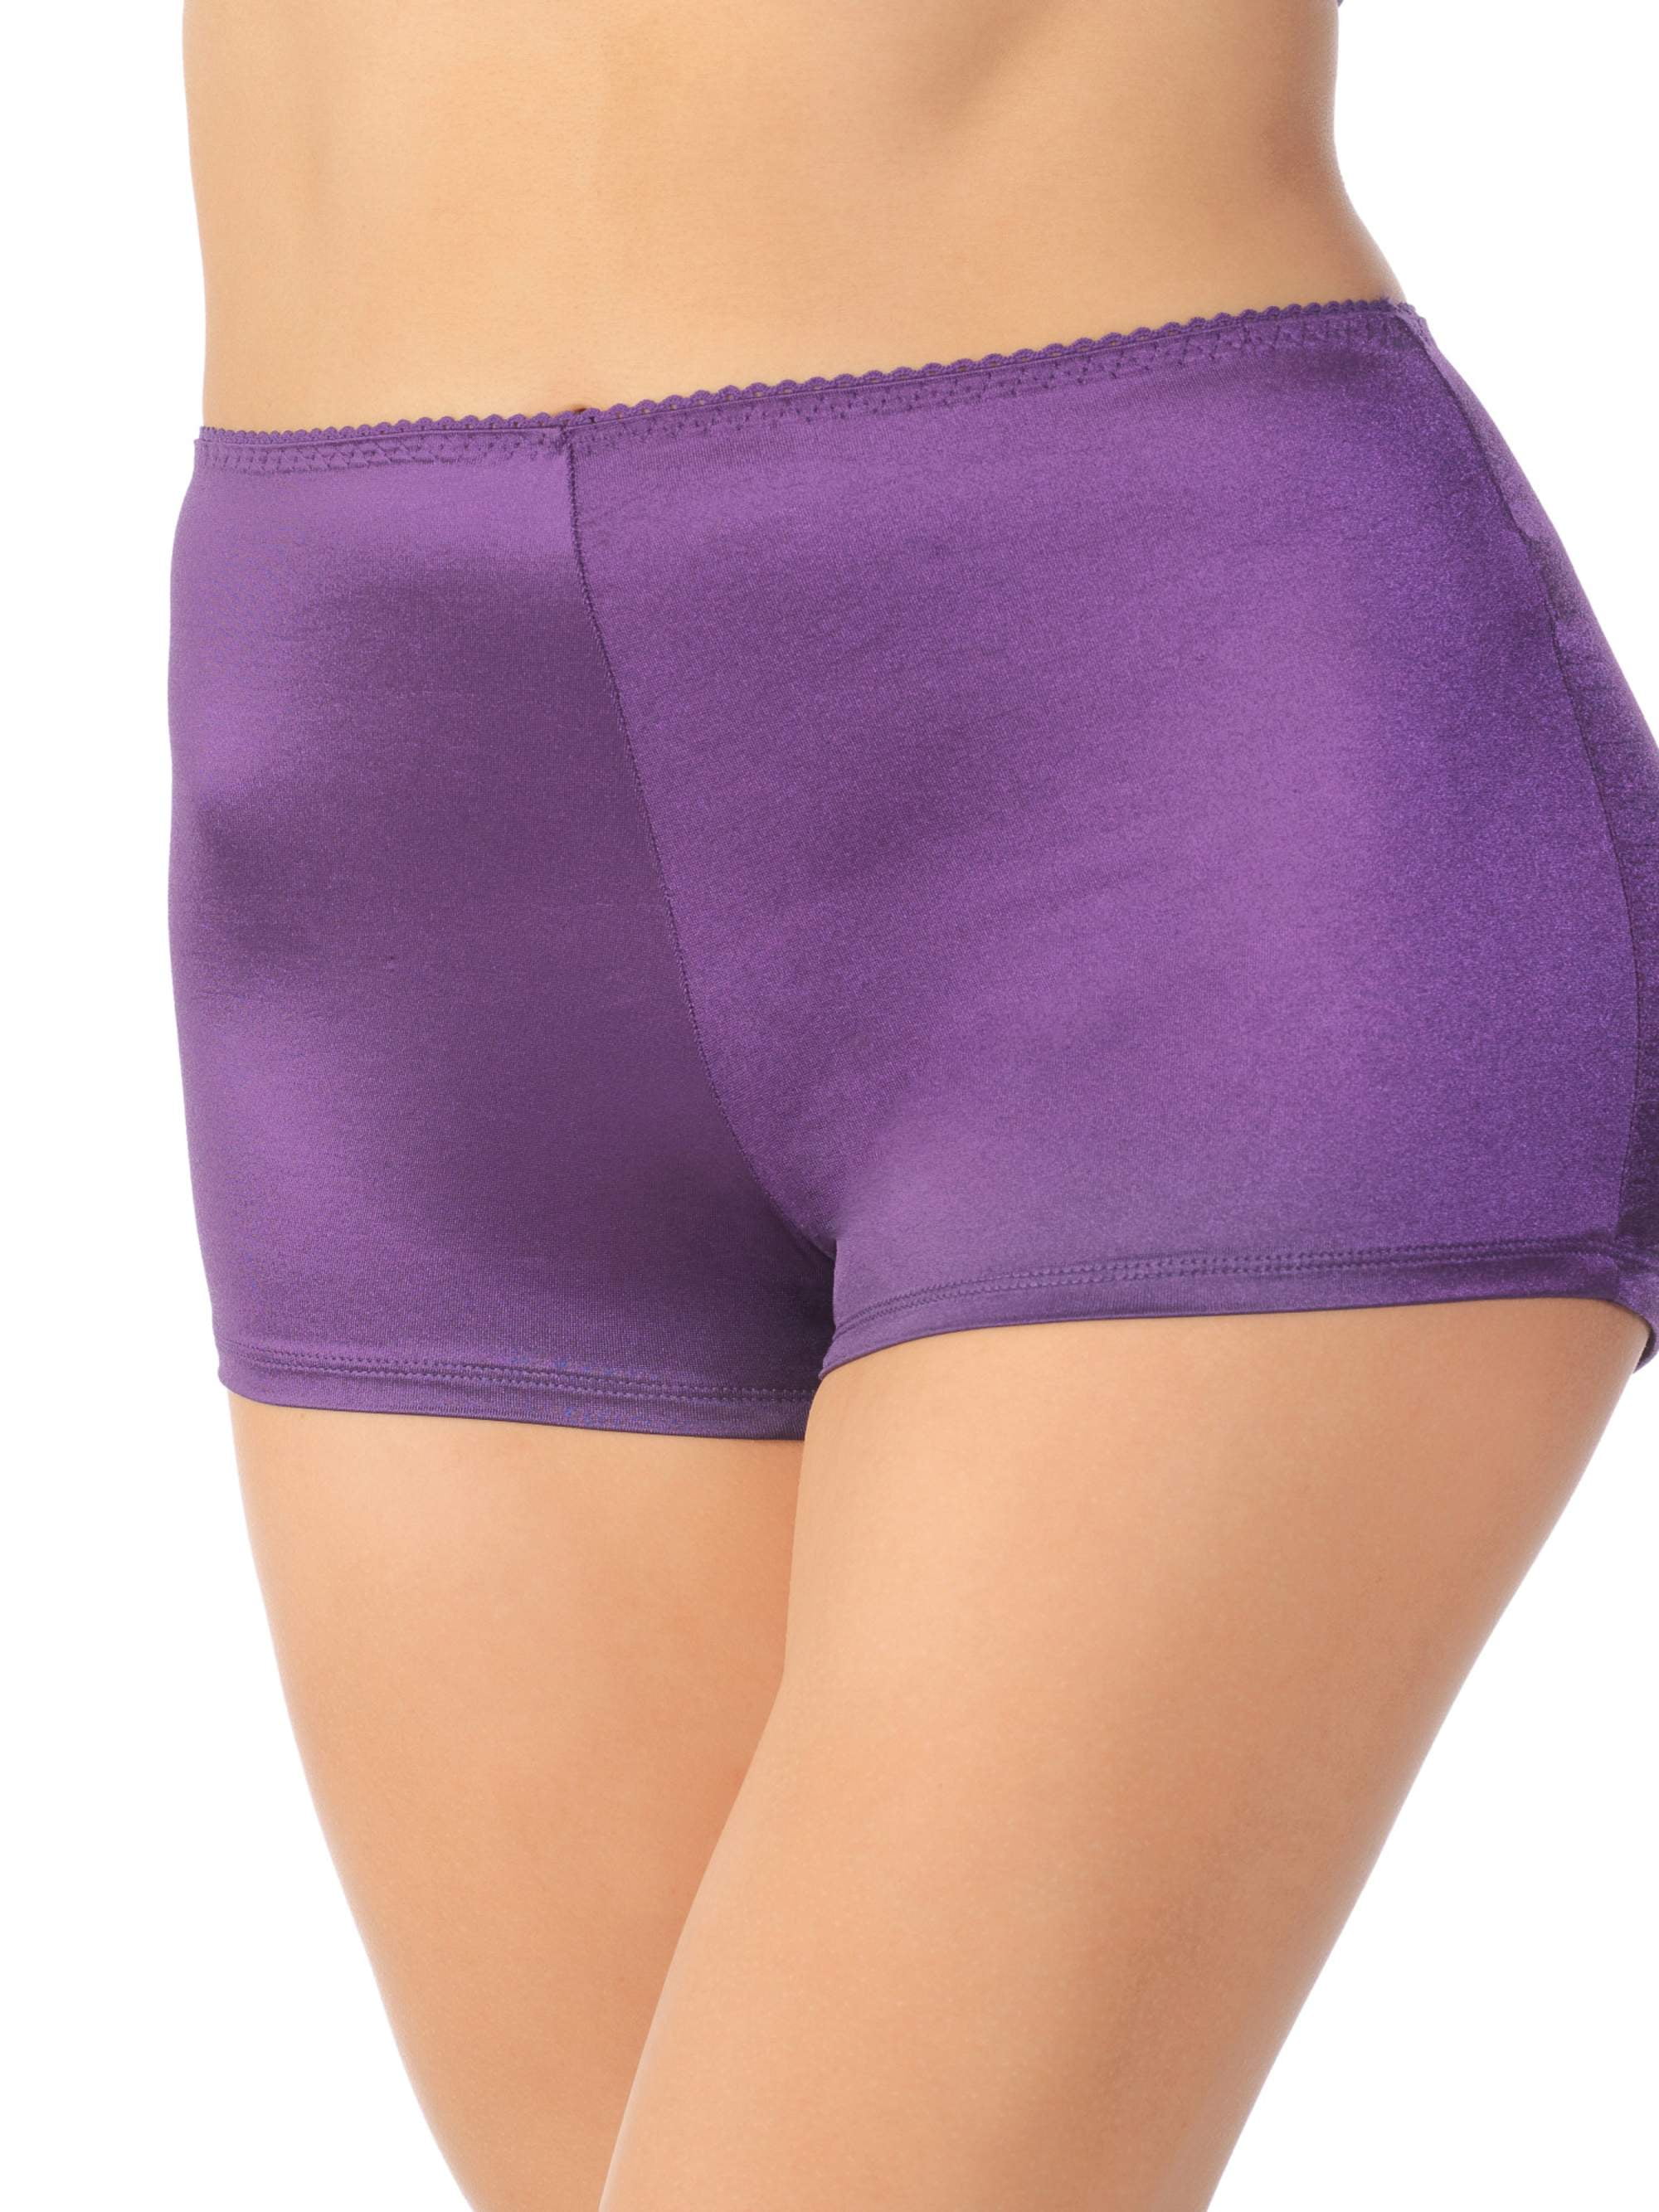 Vassarette Women's Undershapers Light Control Boy Short Panty, Style 42001  